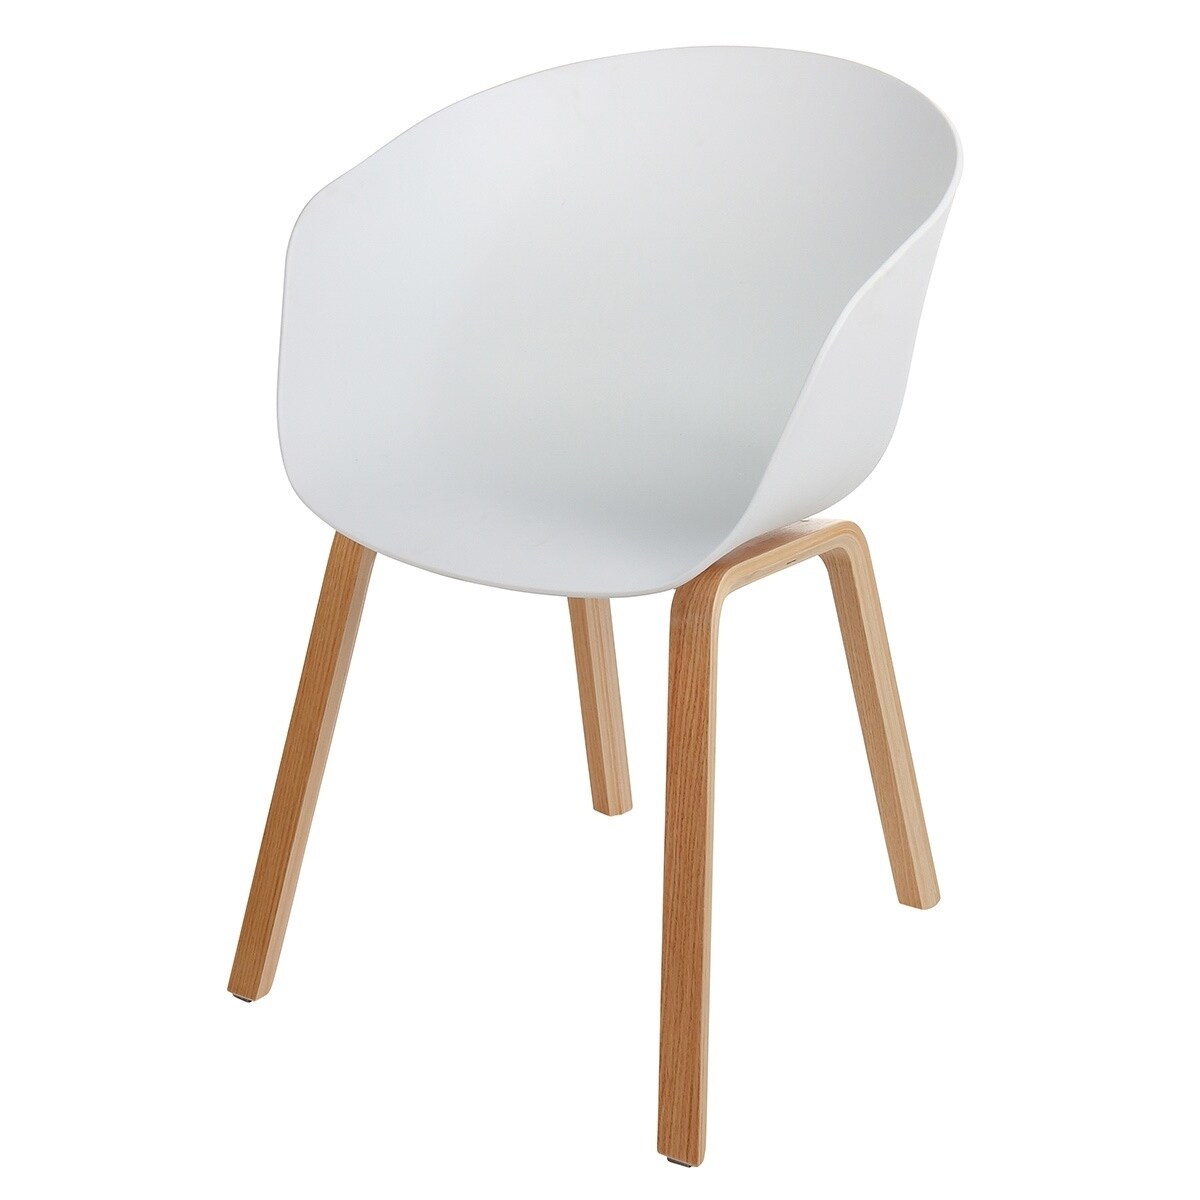 Danish Mid-Century Modern Side Chair, Curved Wood Legs - Black